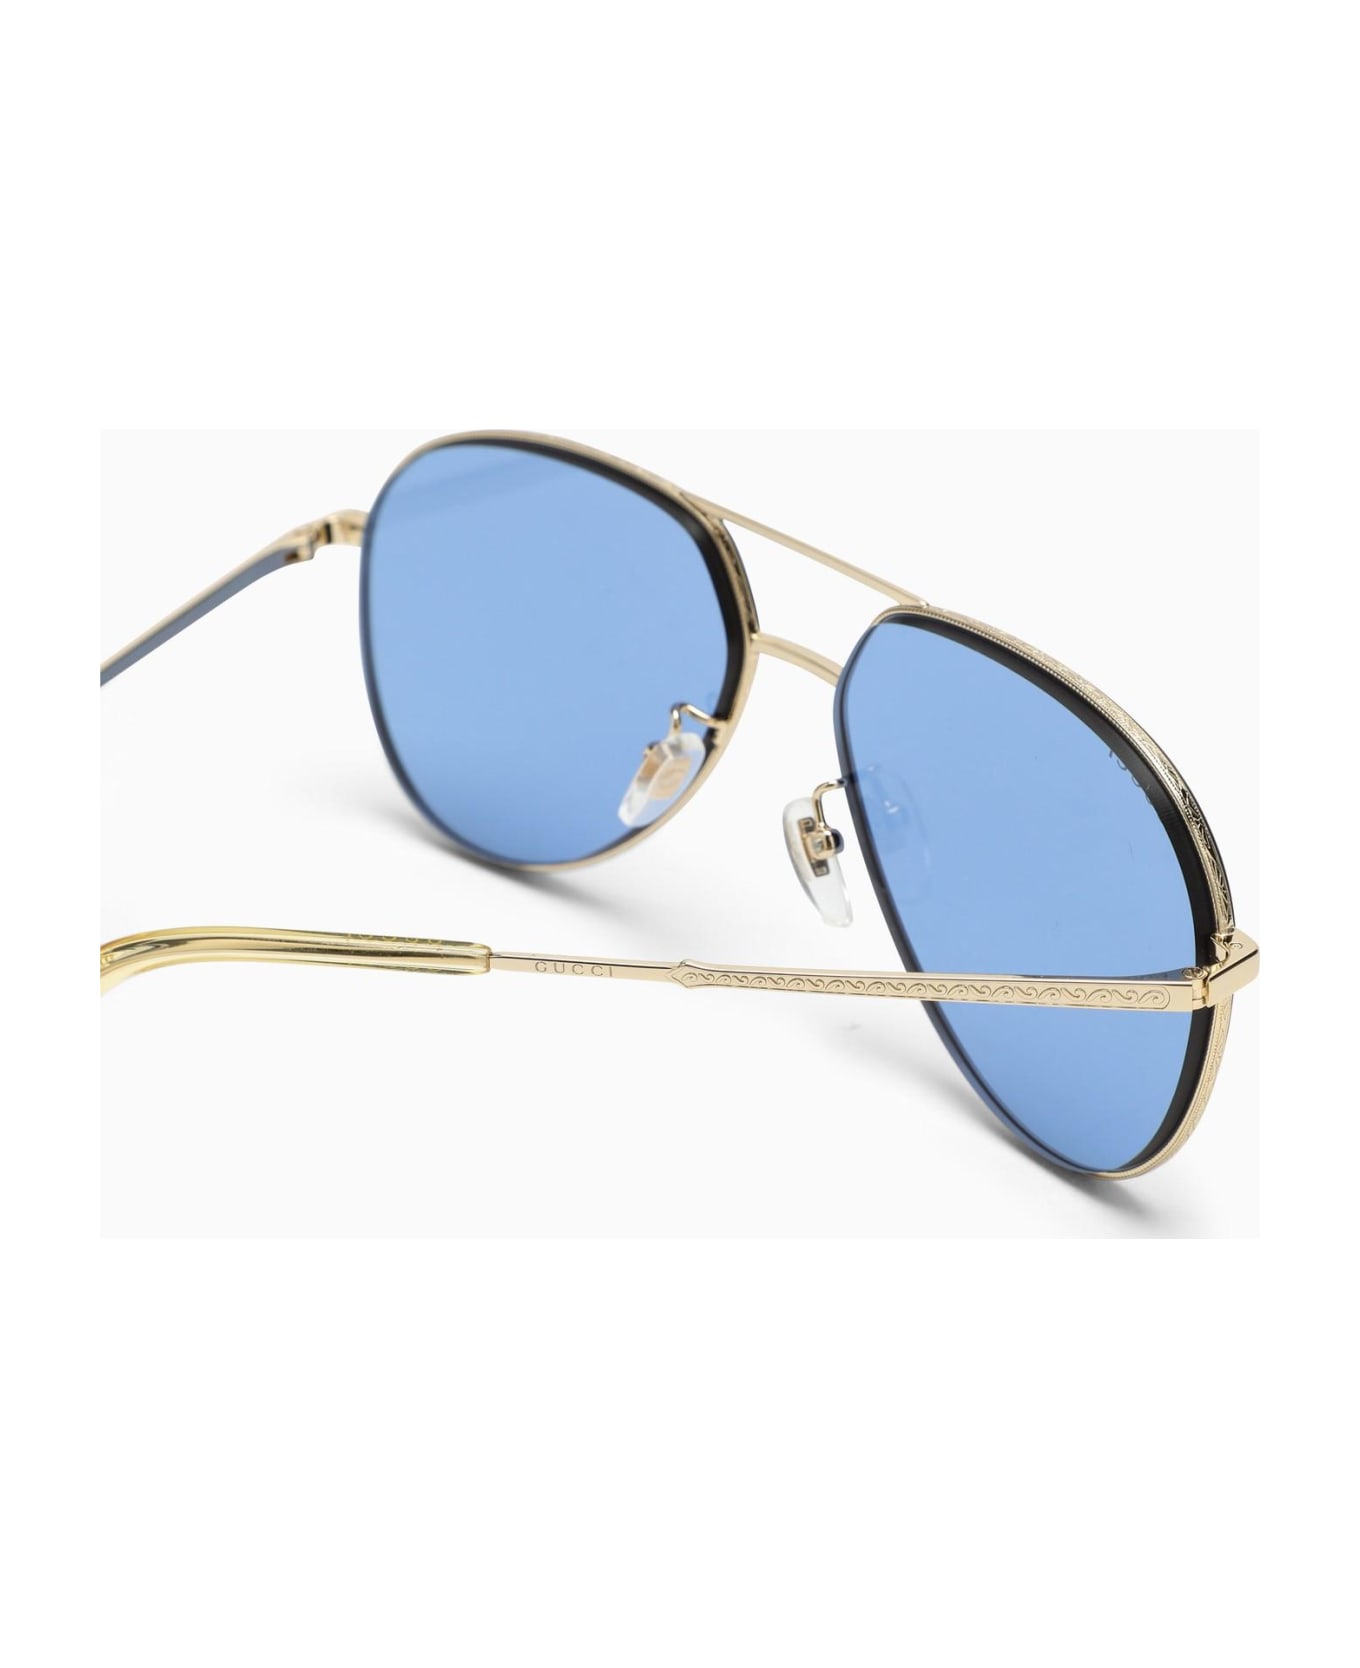 Gucci Eyewear Aviator Blue Sunglasses